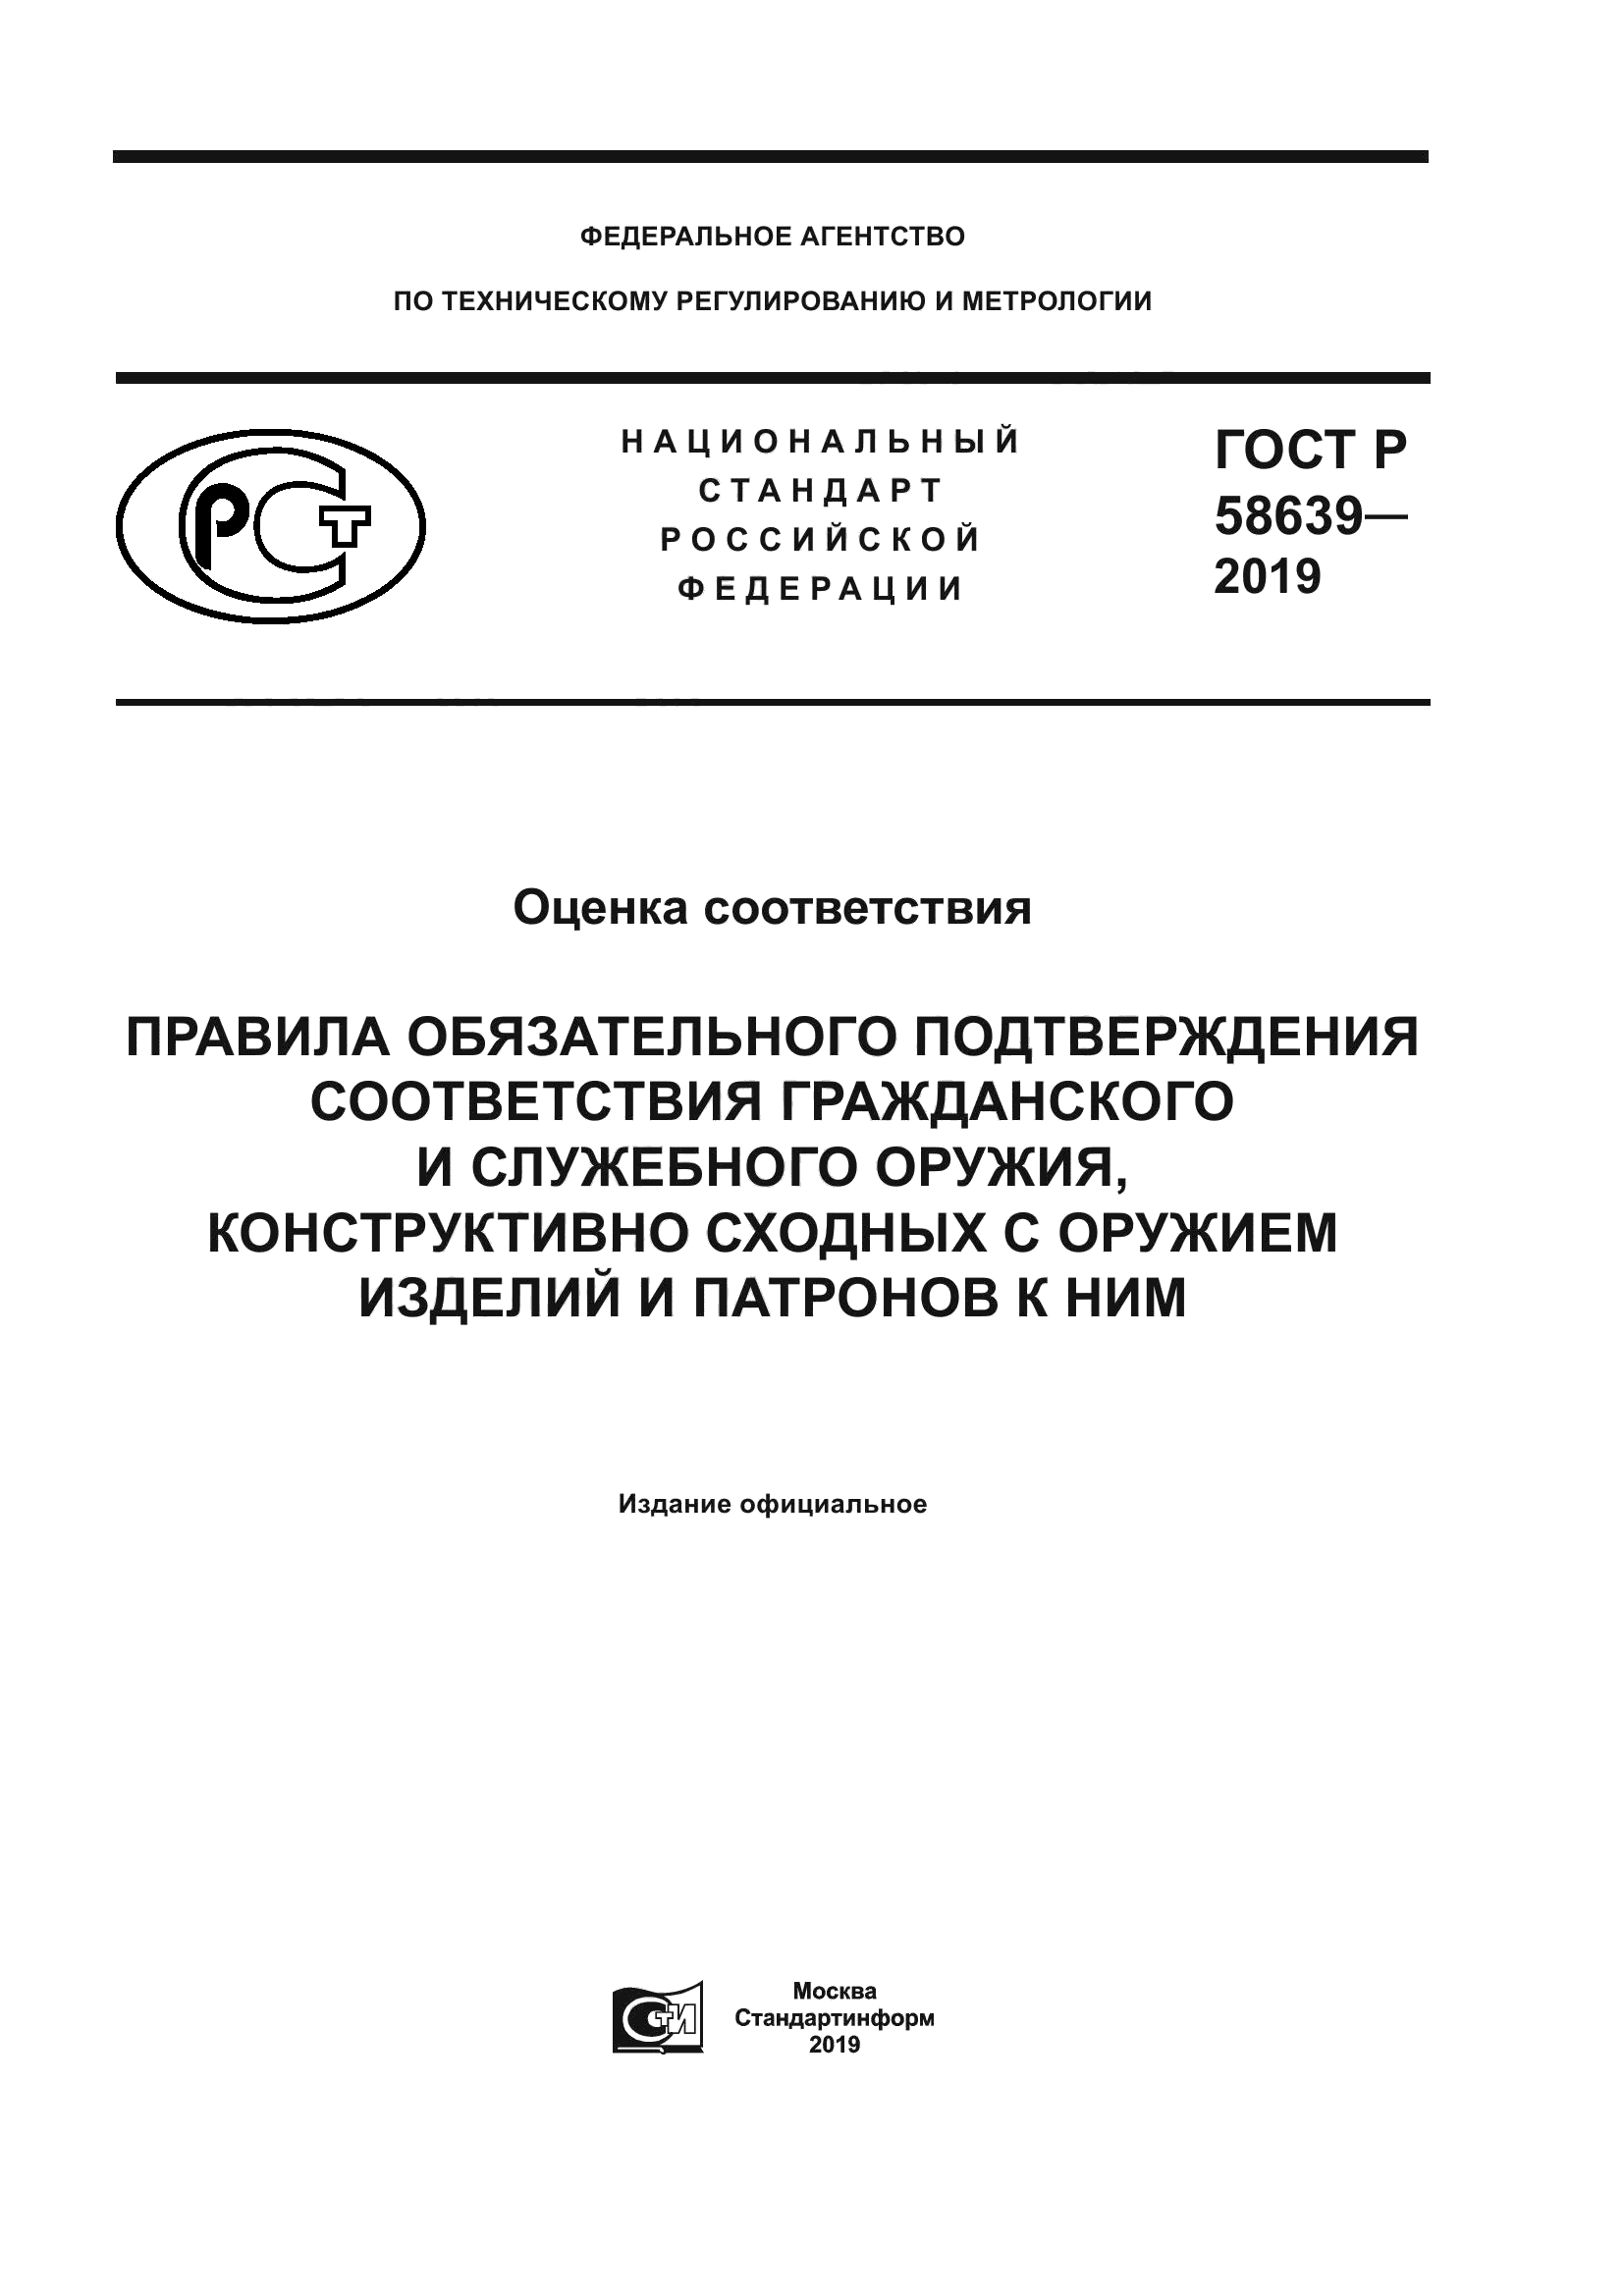 ГОСТ Р 58639-2019